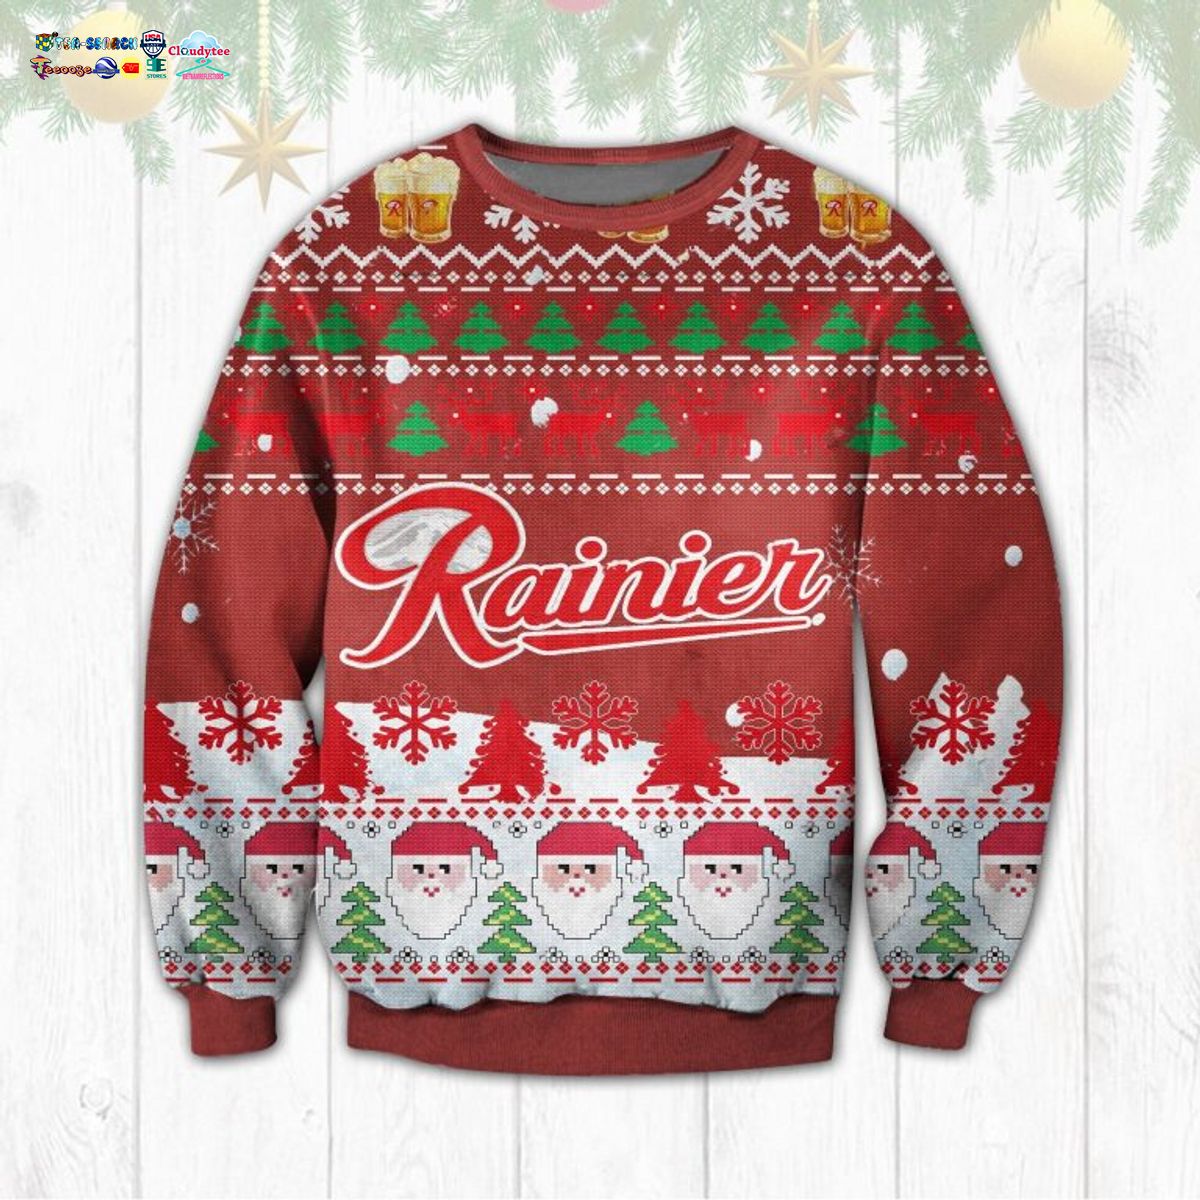 Rainier Ver 1 Ugly Christmas Sweater